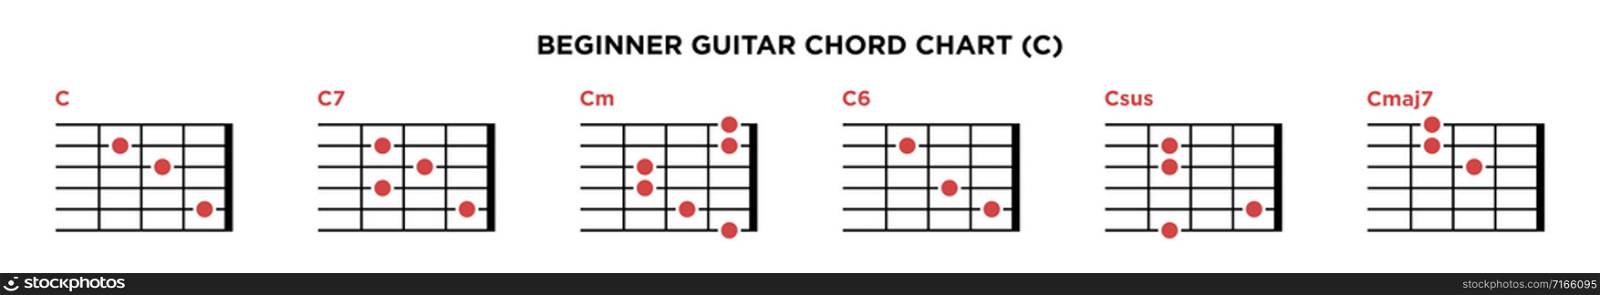 Basic Guitar Chord Chart Icon Vector Template. C key guitar chord.